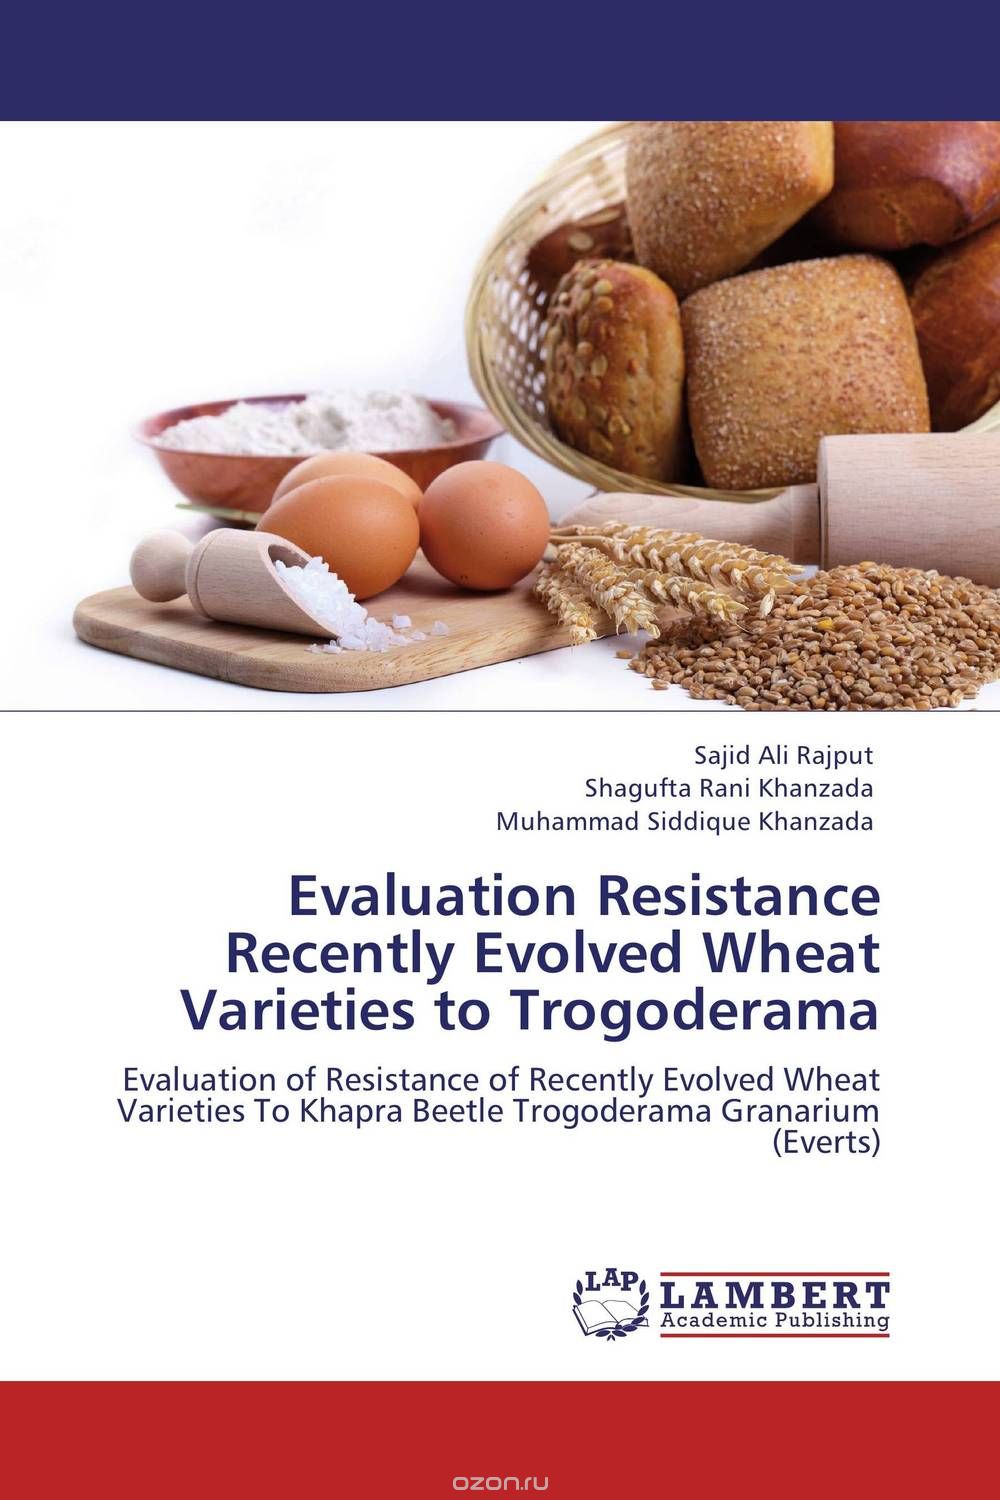 Скачать книгу "Evaluation Resistance Recently Evolved Wheat Varieties to Trogoderama"